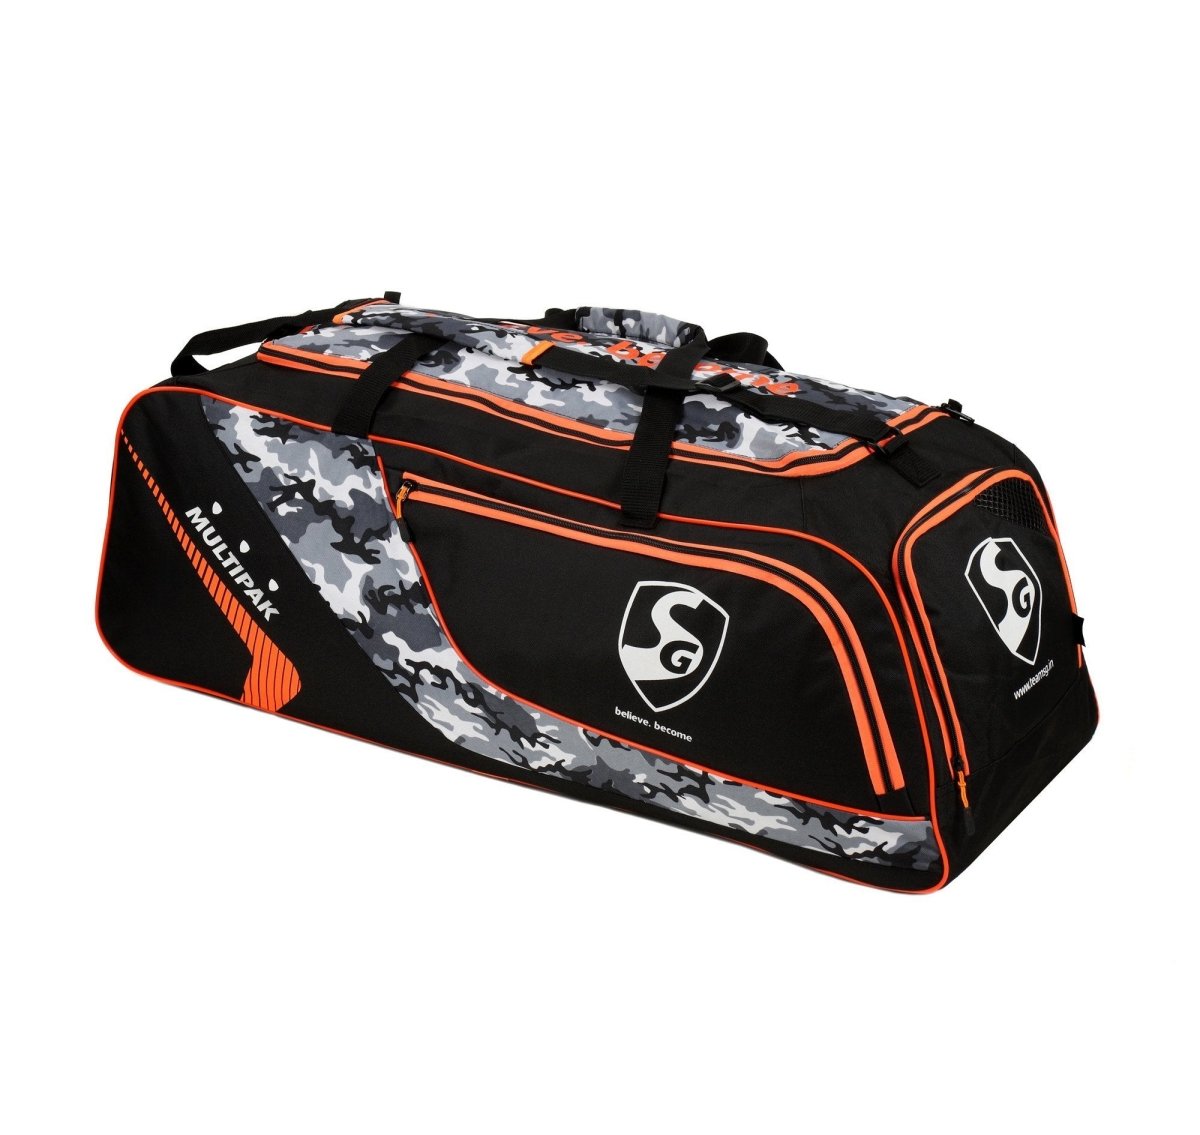 SG Multipak Cricket Kit Bag.